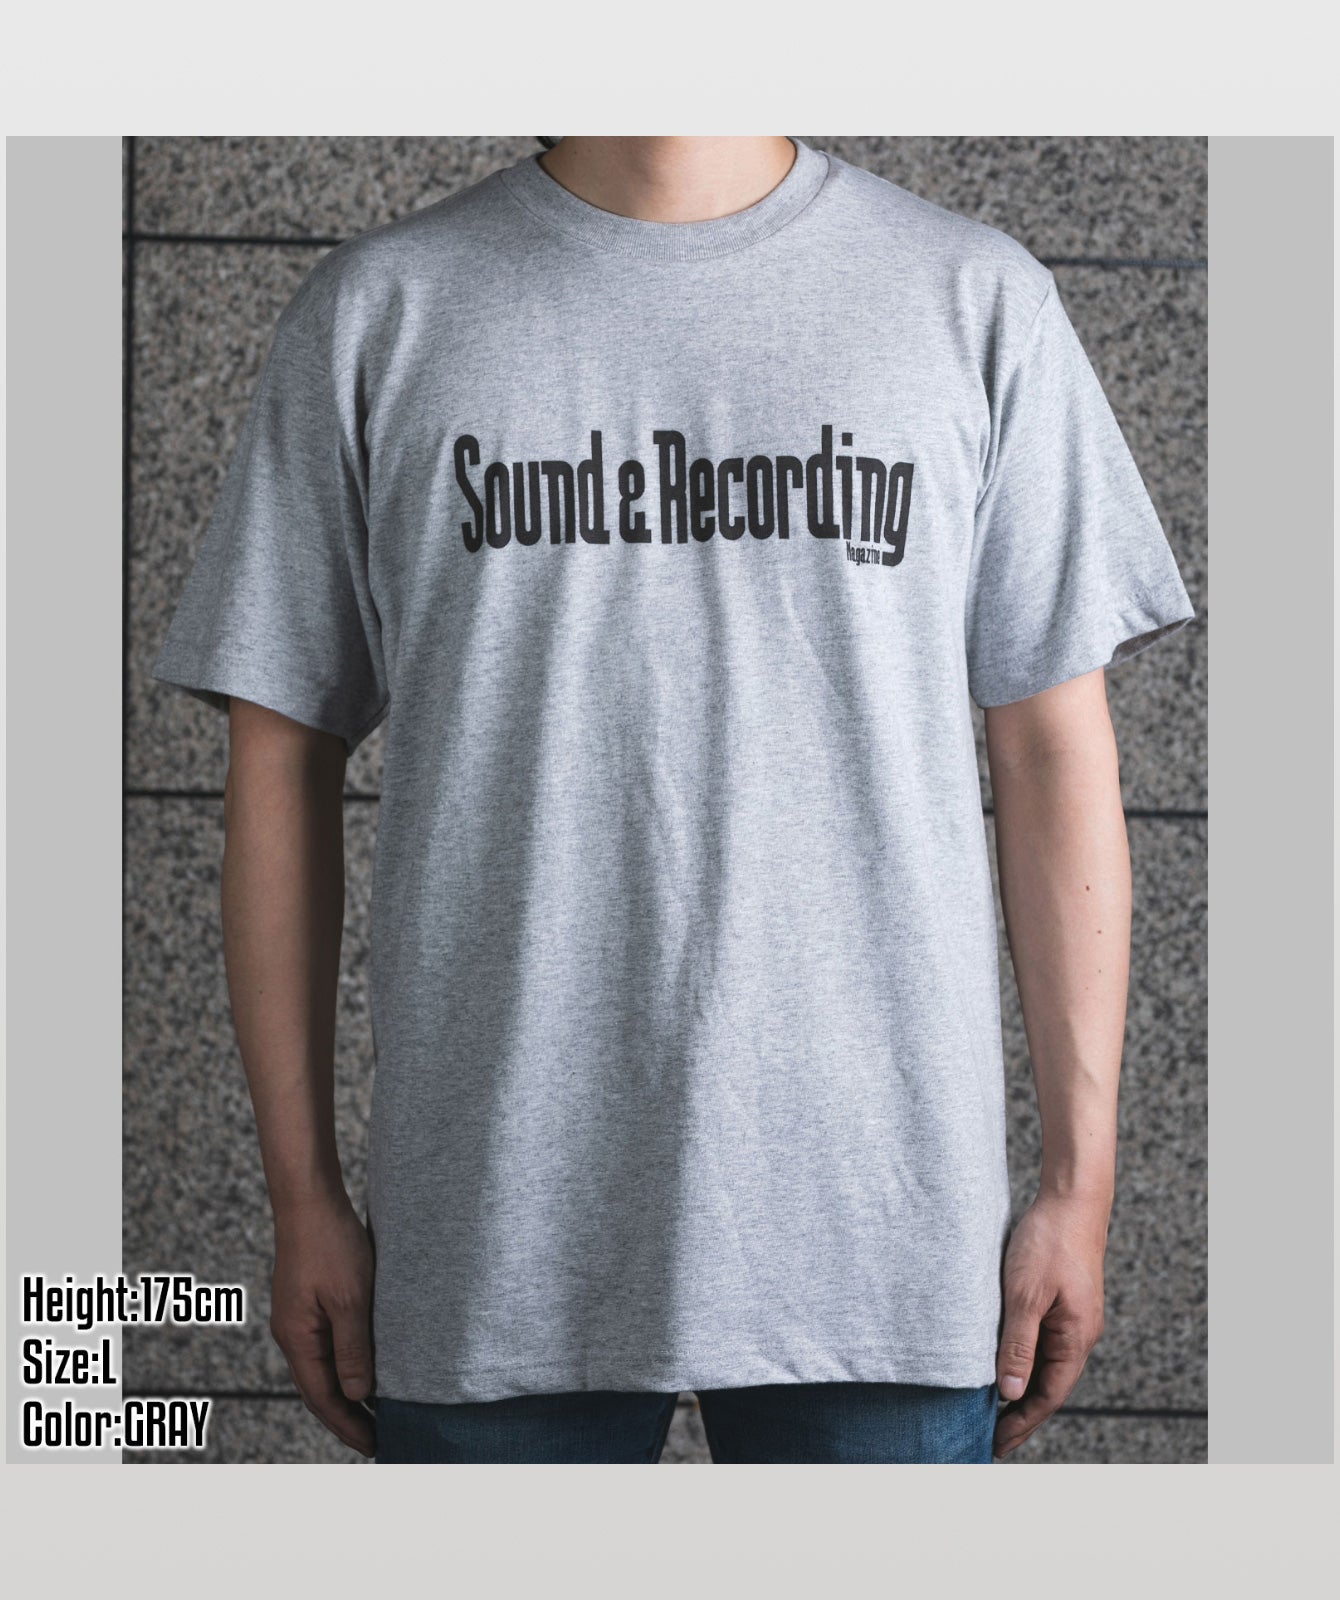 Sound & Recording Magazine オリジナルロゴ アイボリー